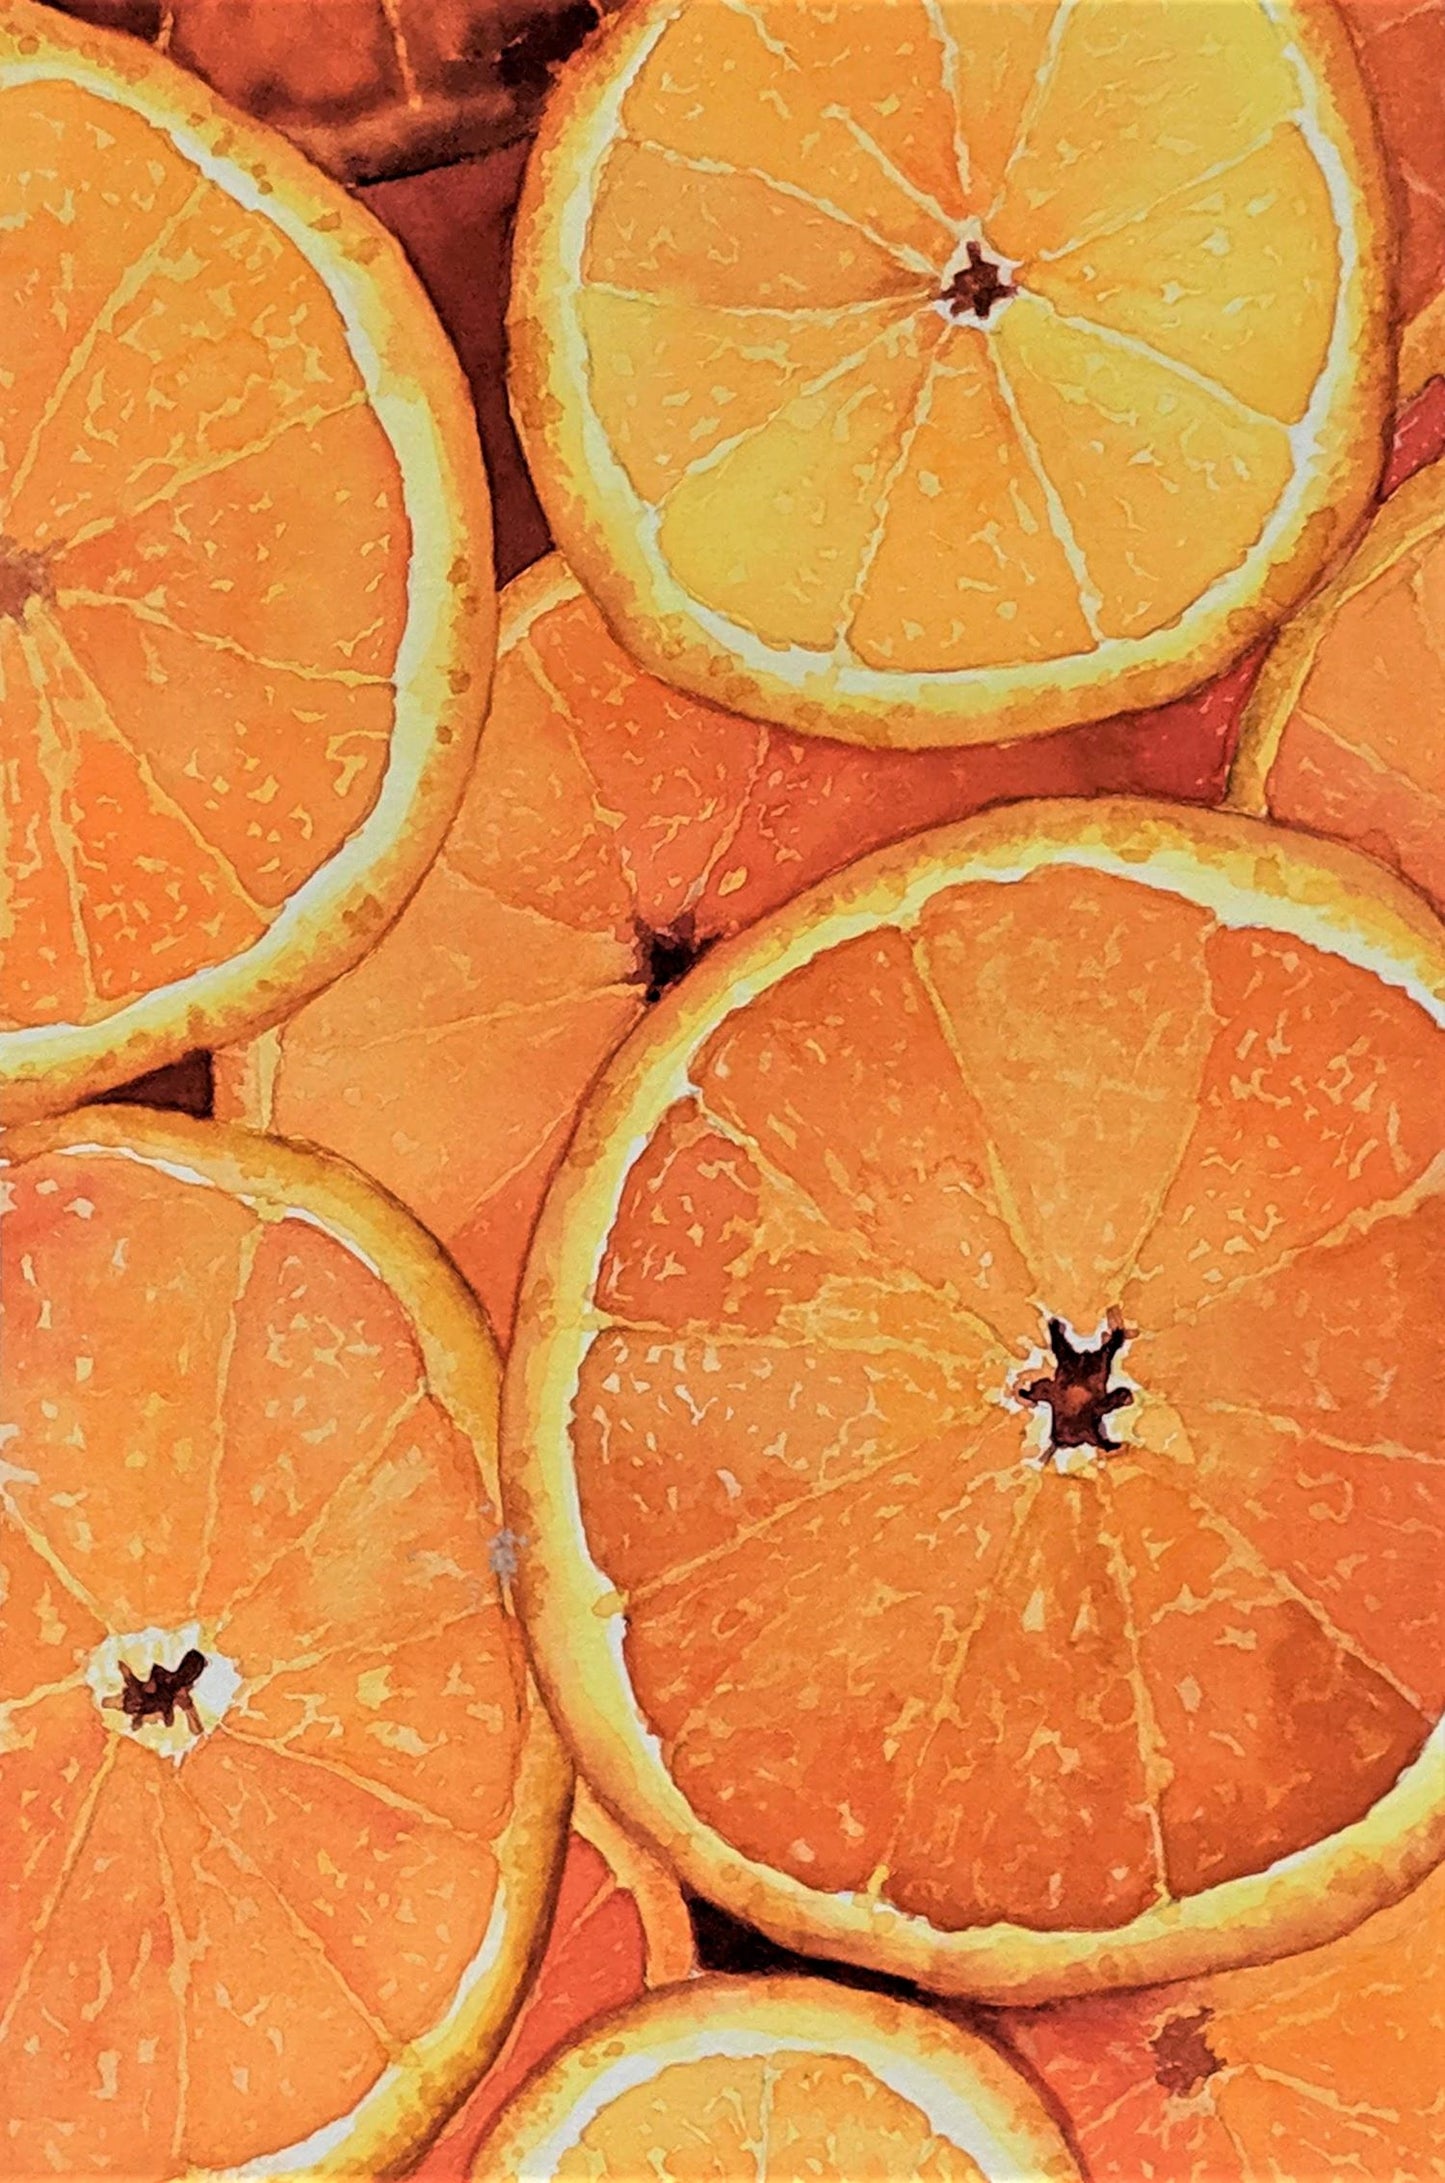 Orange slices watercolor painting